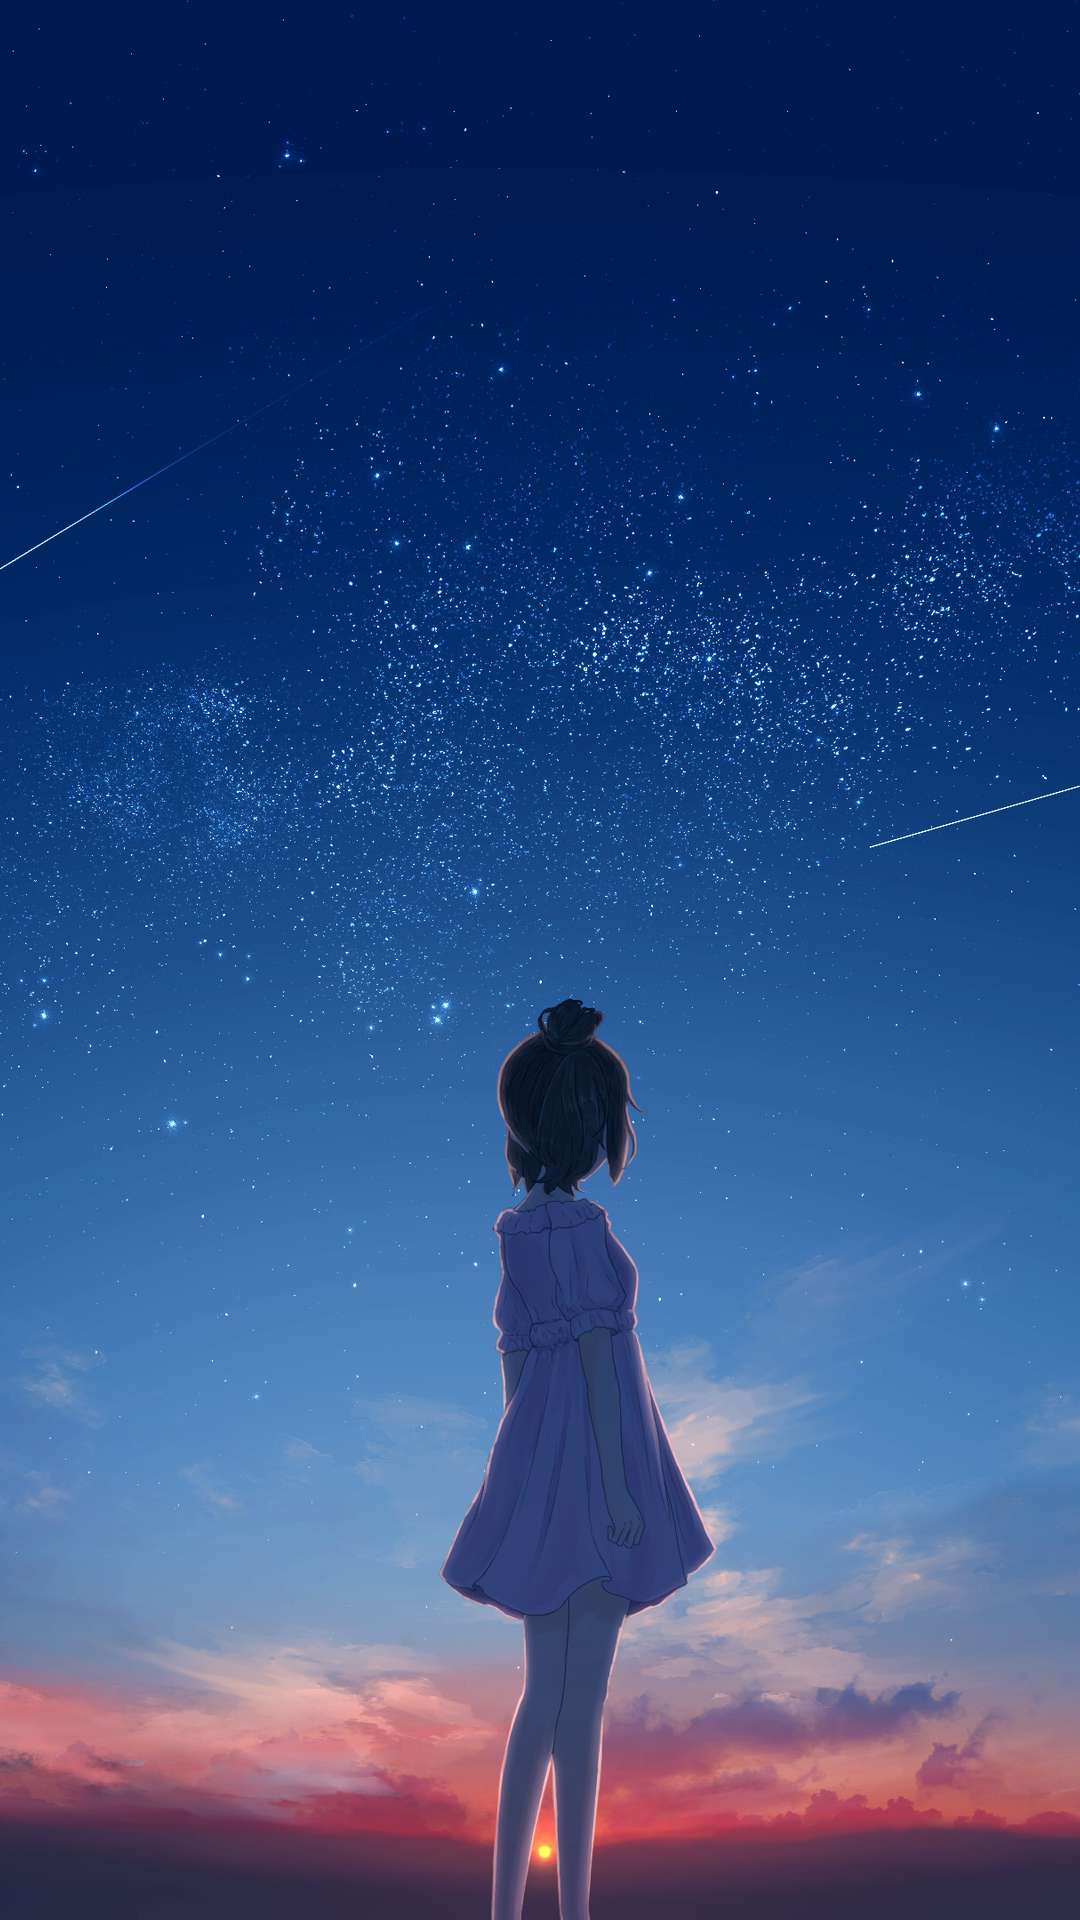 Wallpaper ID 70559  anime girl anime sad alone artist artwork  digital art hd 4k free download